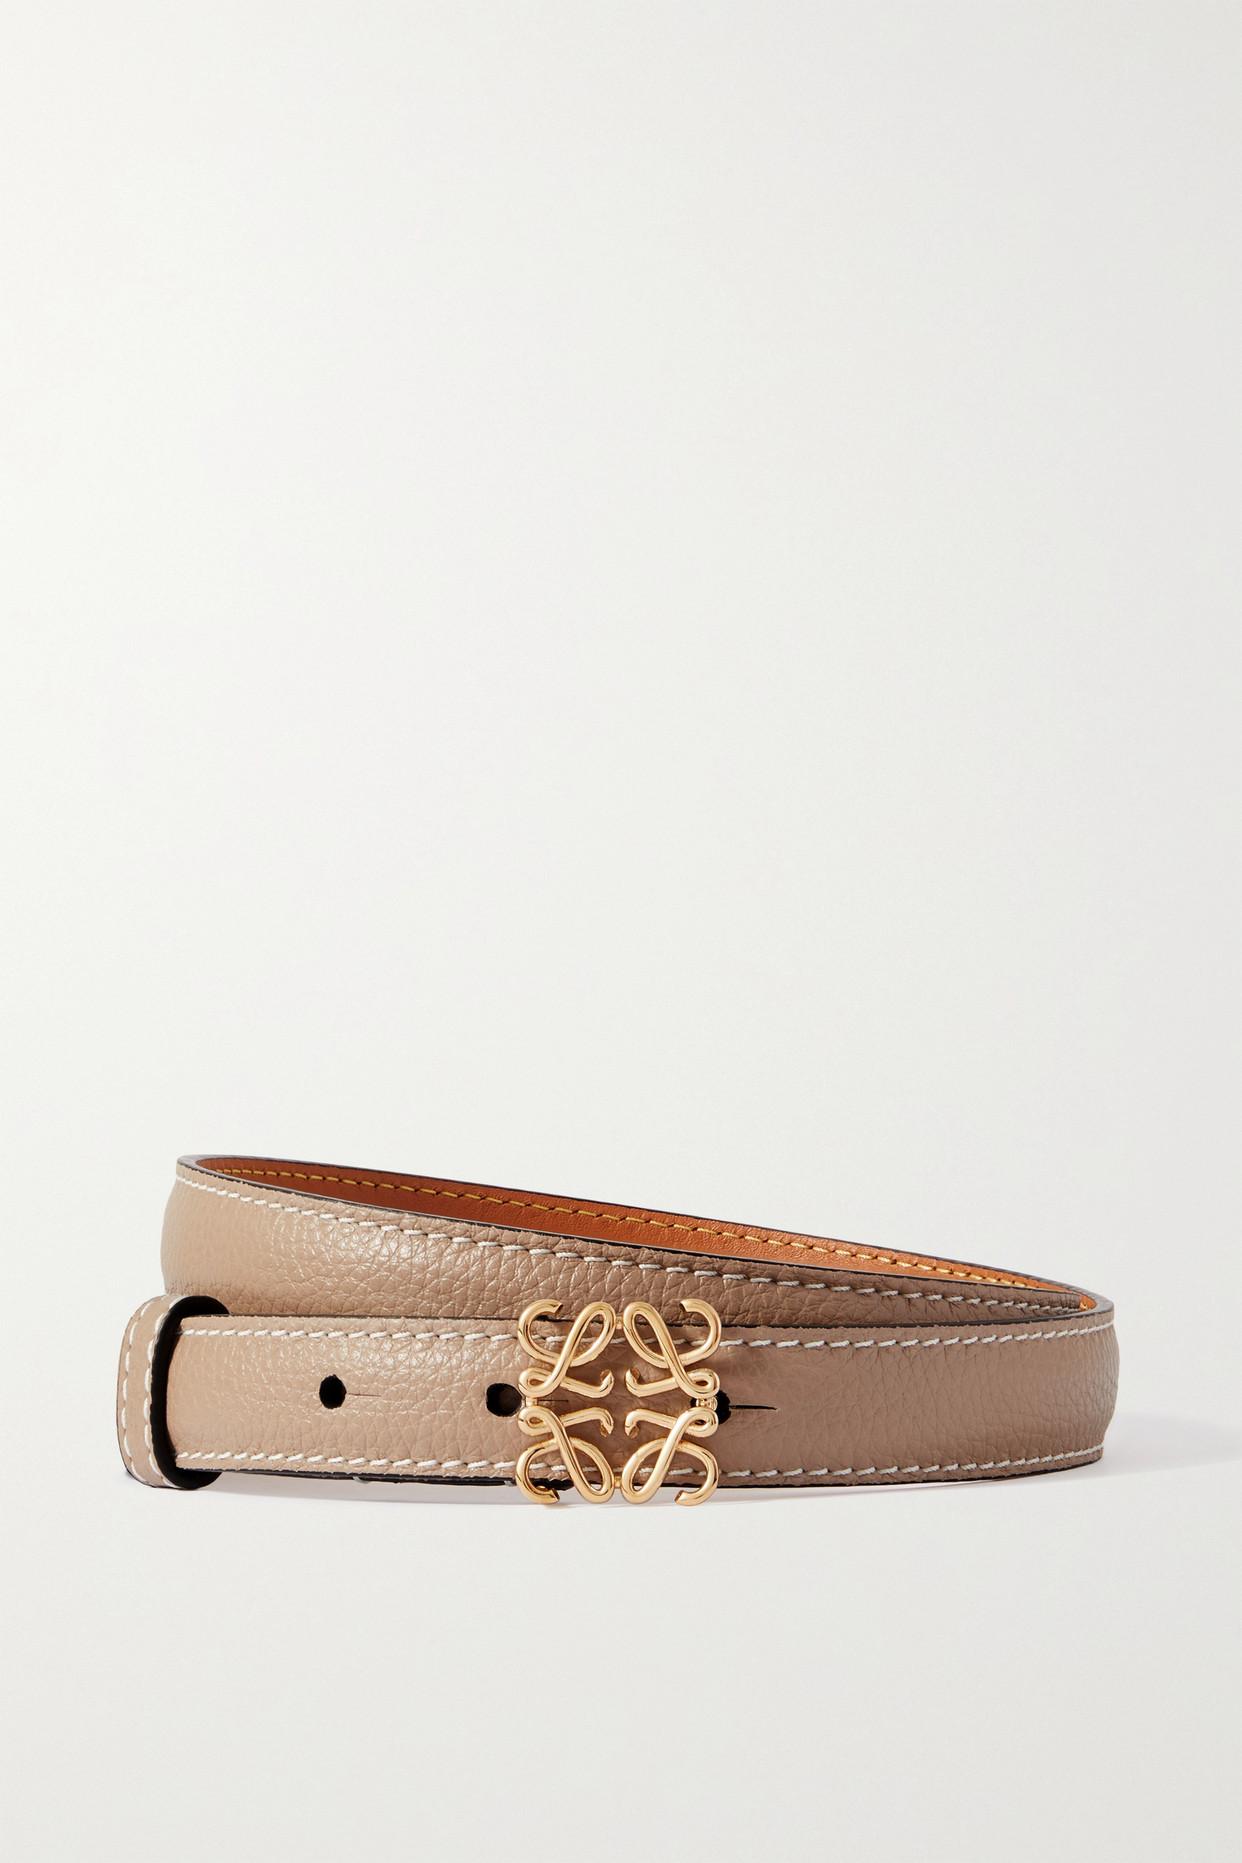 Loewe Anagram Textured-leather Belt | Lyst